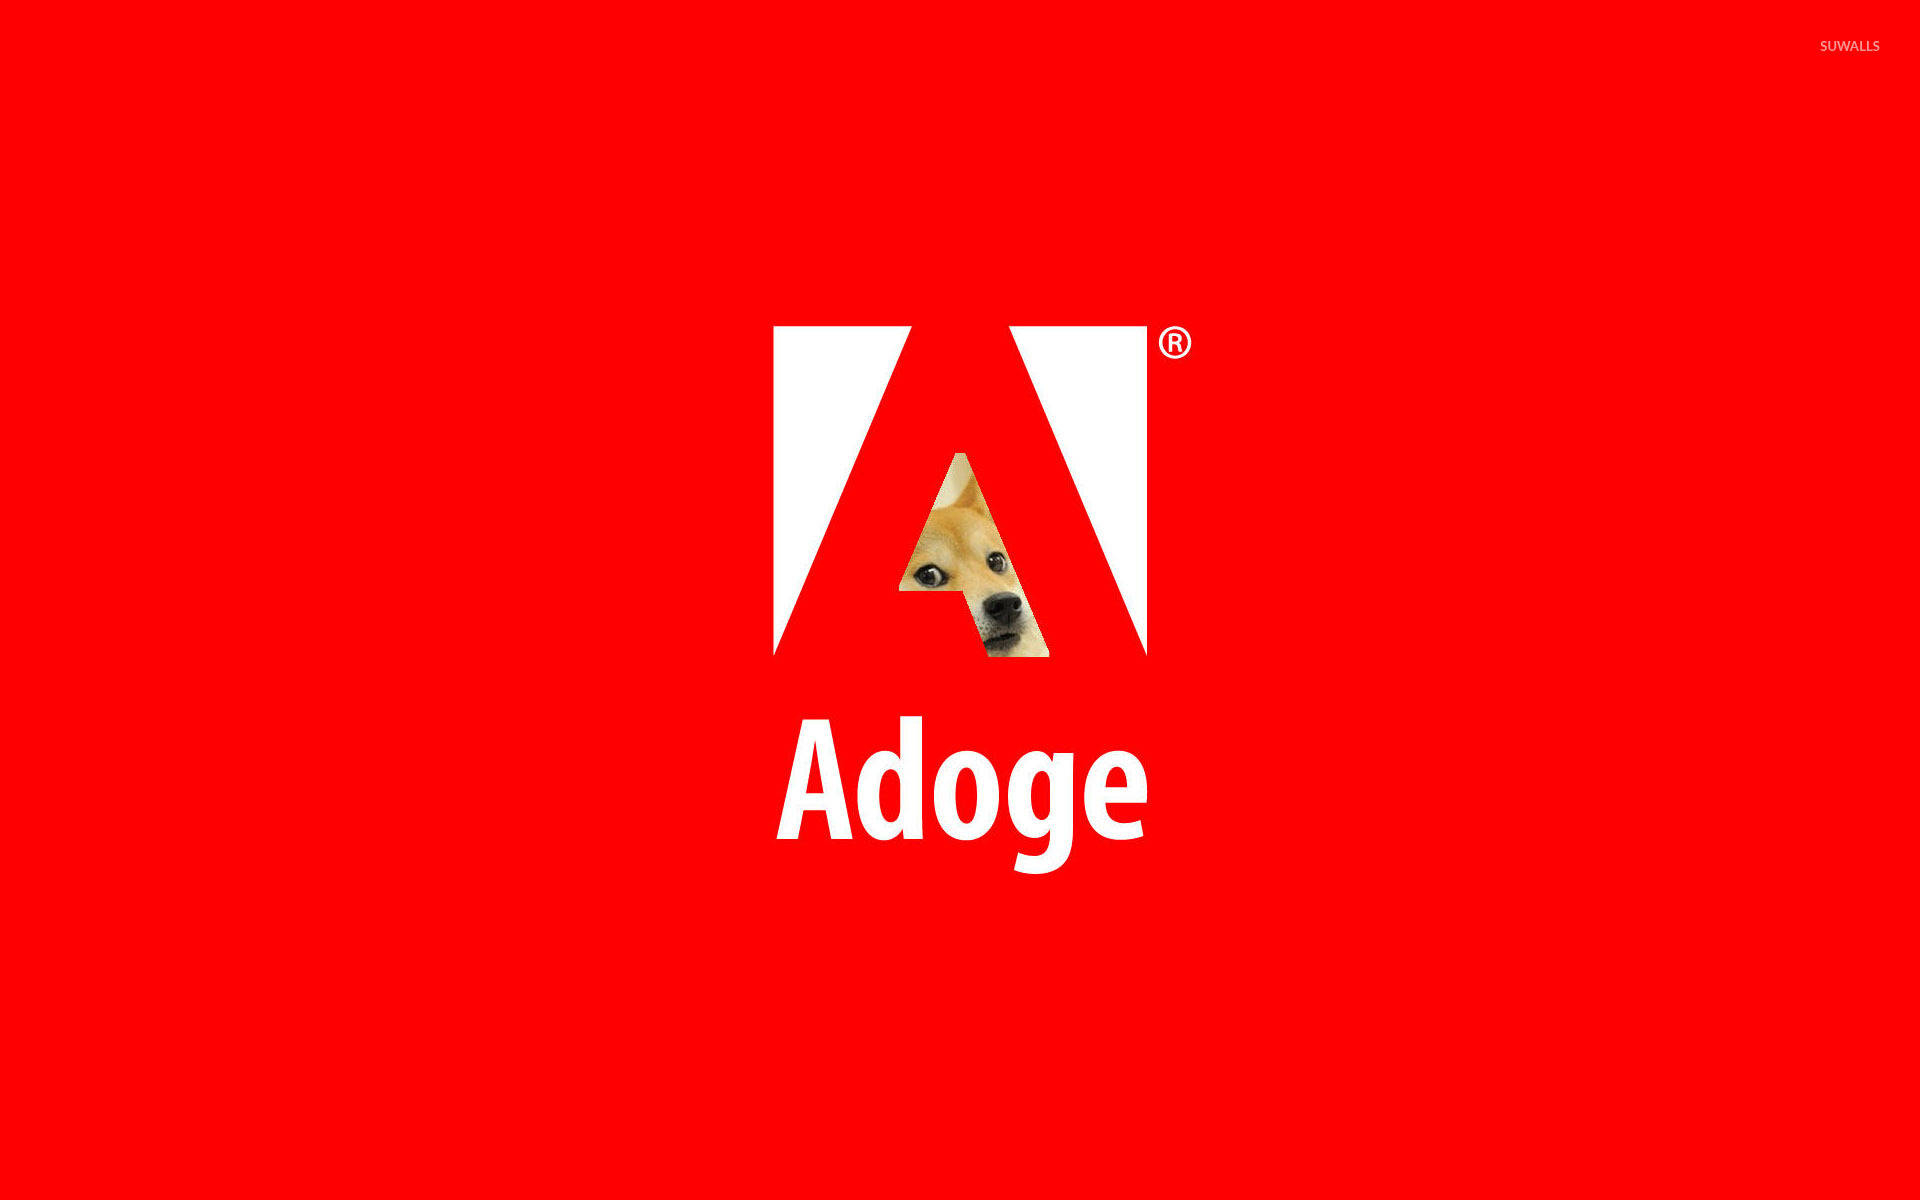 Adoge Doge Meme Wallpaper